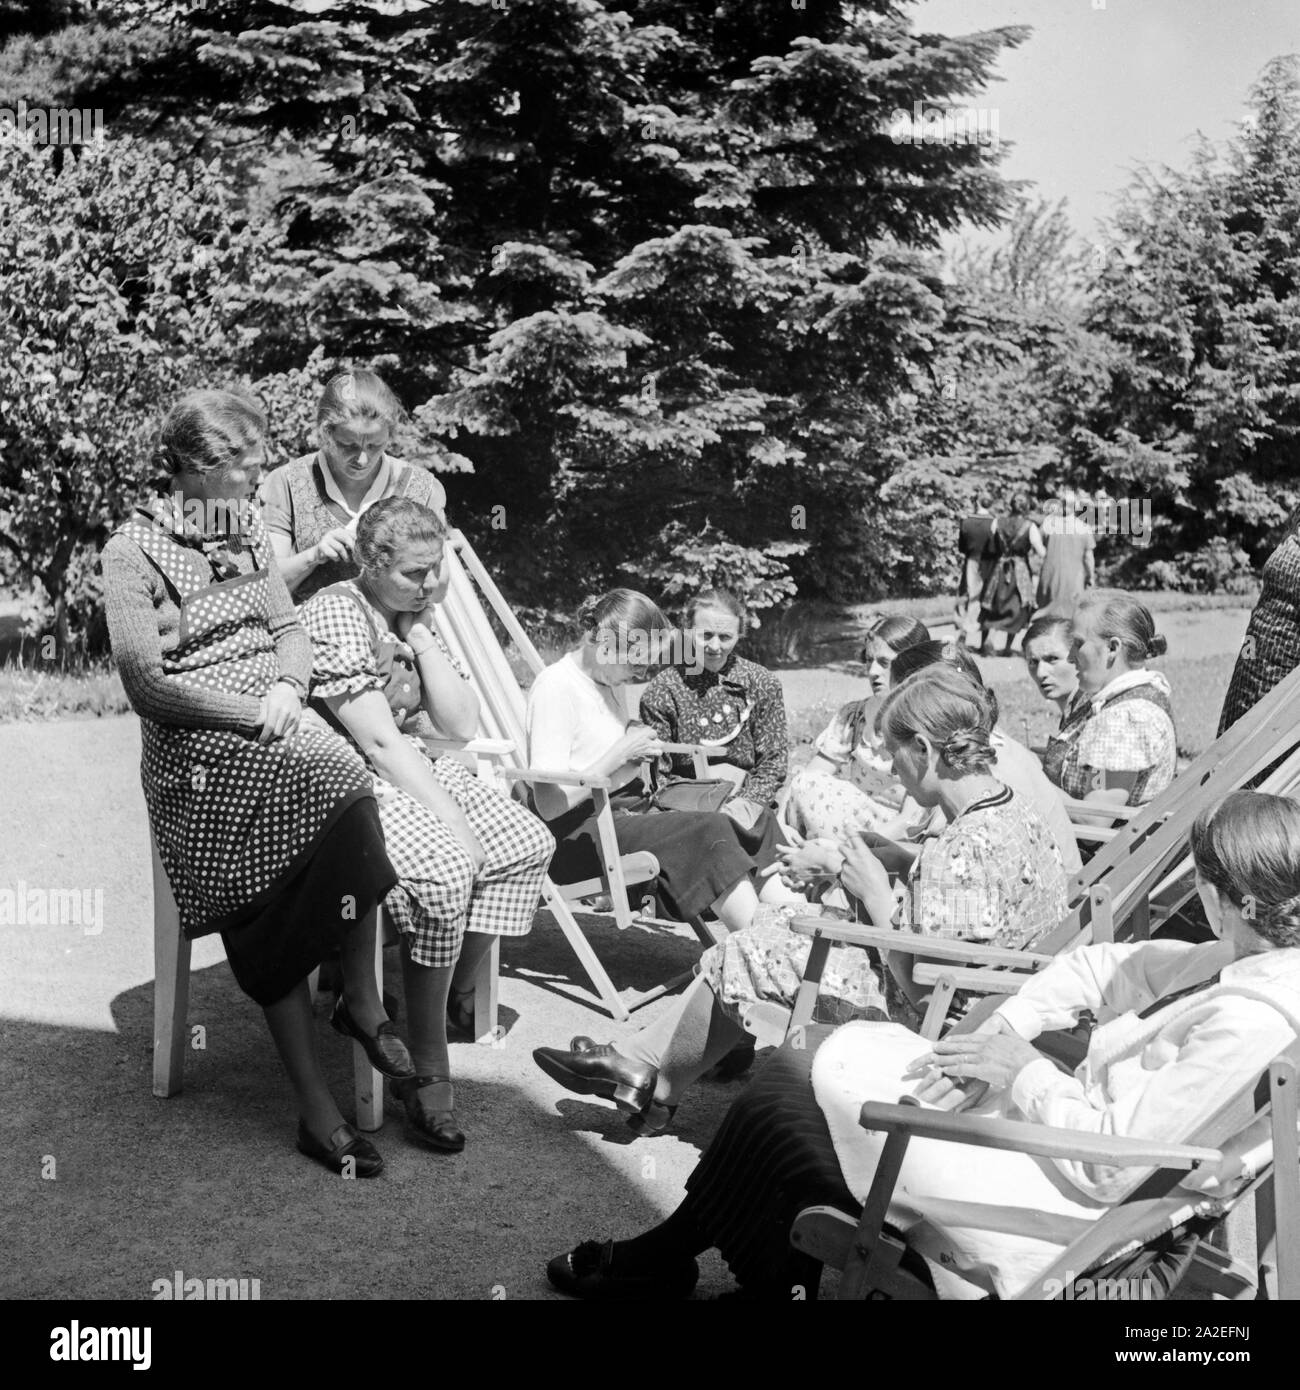 Frauen entspannen sich bei einer Unterhaltung im Mutter und tipo Heim in Tabarz, Thüringer Wald, 1930er Jahre. Le donne rilassante pur avendo una chat in una madre e un bambino ricreazione home in Tabarz, Turingia. Foto Stock